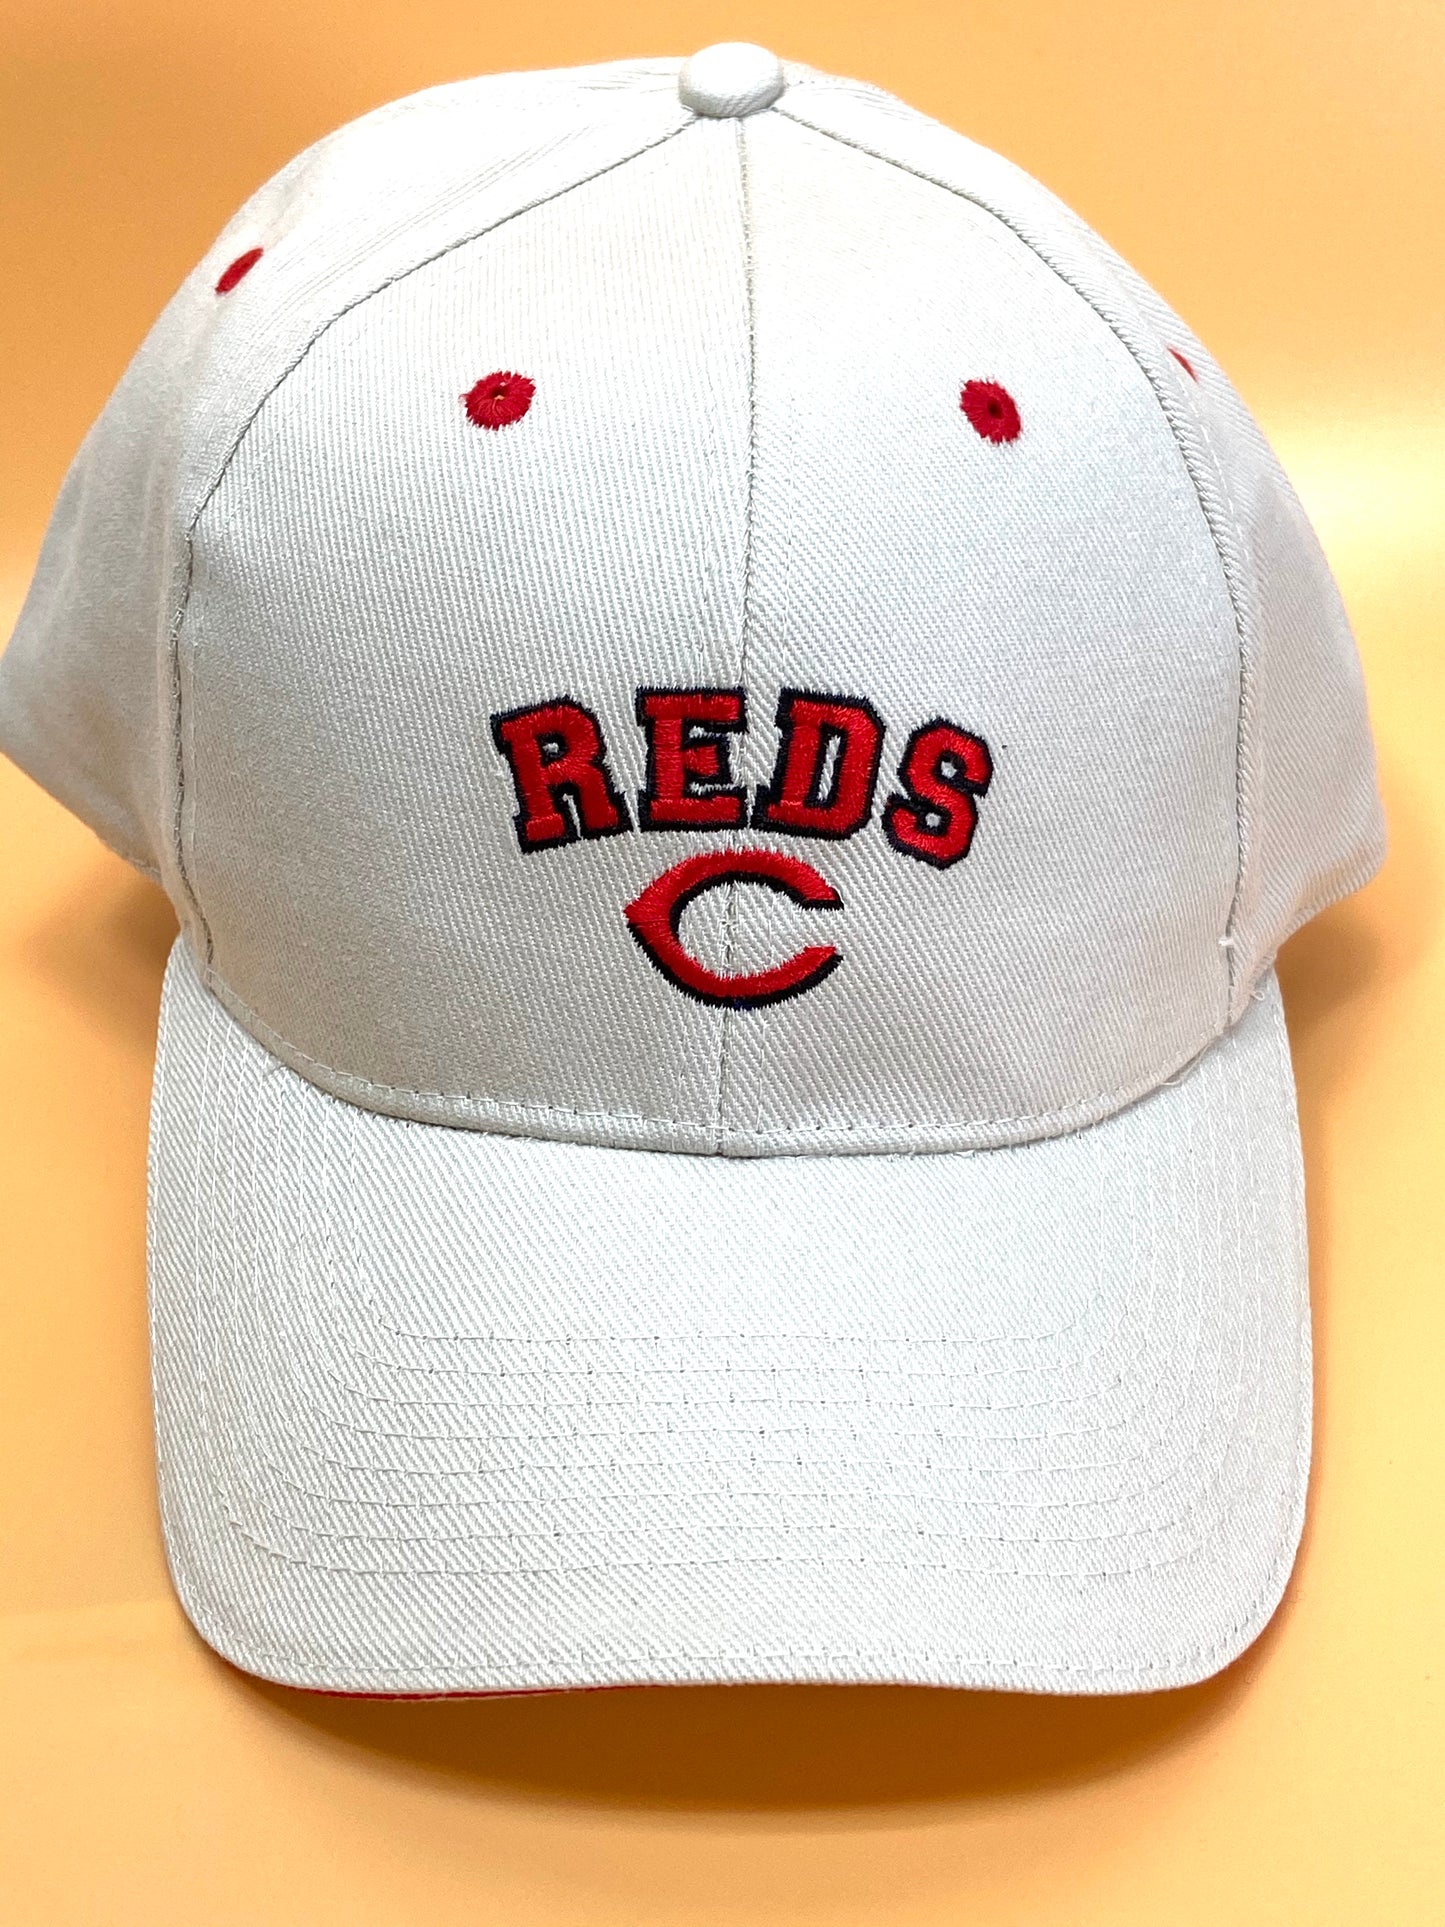 Cincinnati Reds Vintage MLB Cream "Block Reds" Cap By Drew Pearson